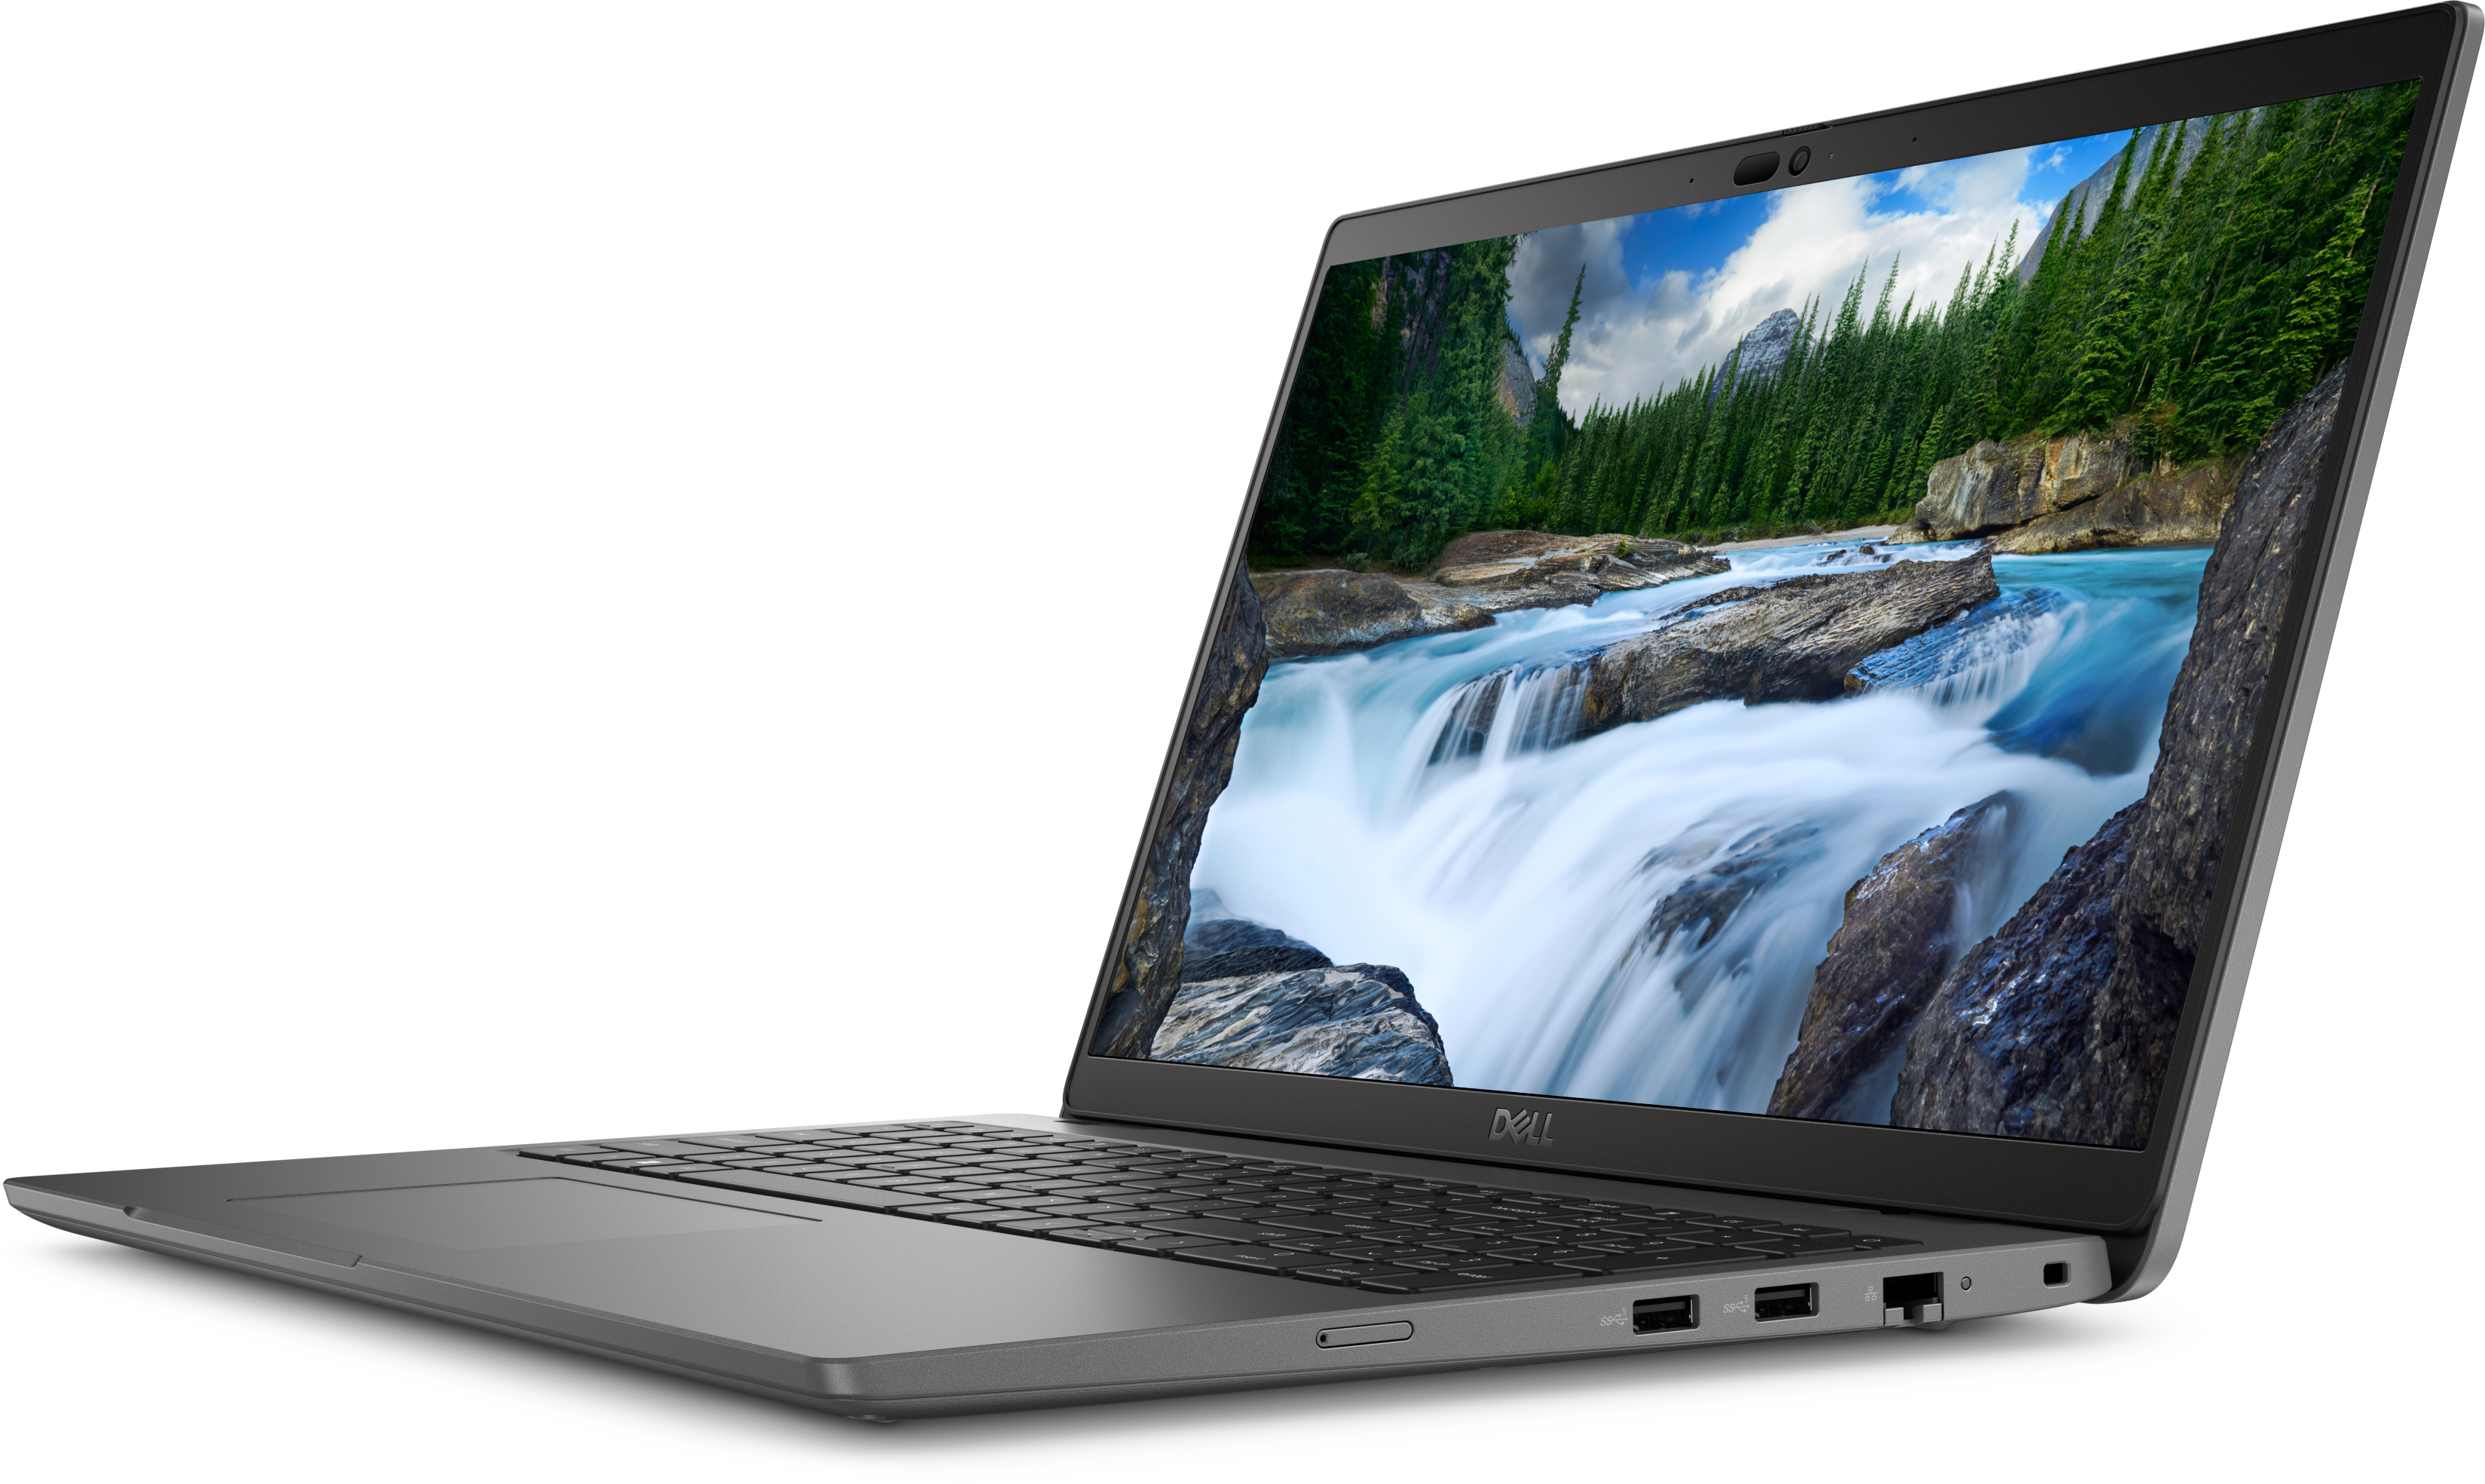 Dell Latitude 3540 Business Laptop - W/ 12th Gen Intel Core - 15.6 FHD Screen - 8GB - 512G